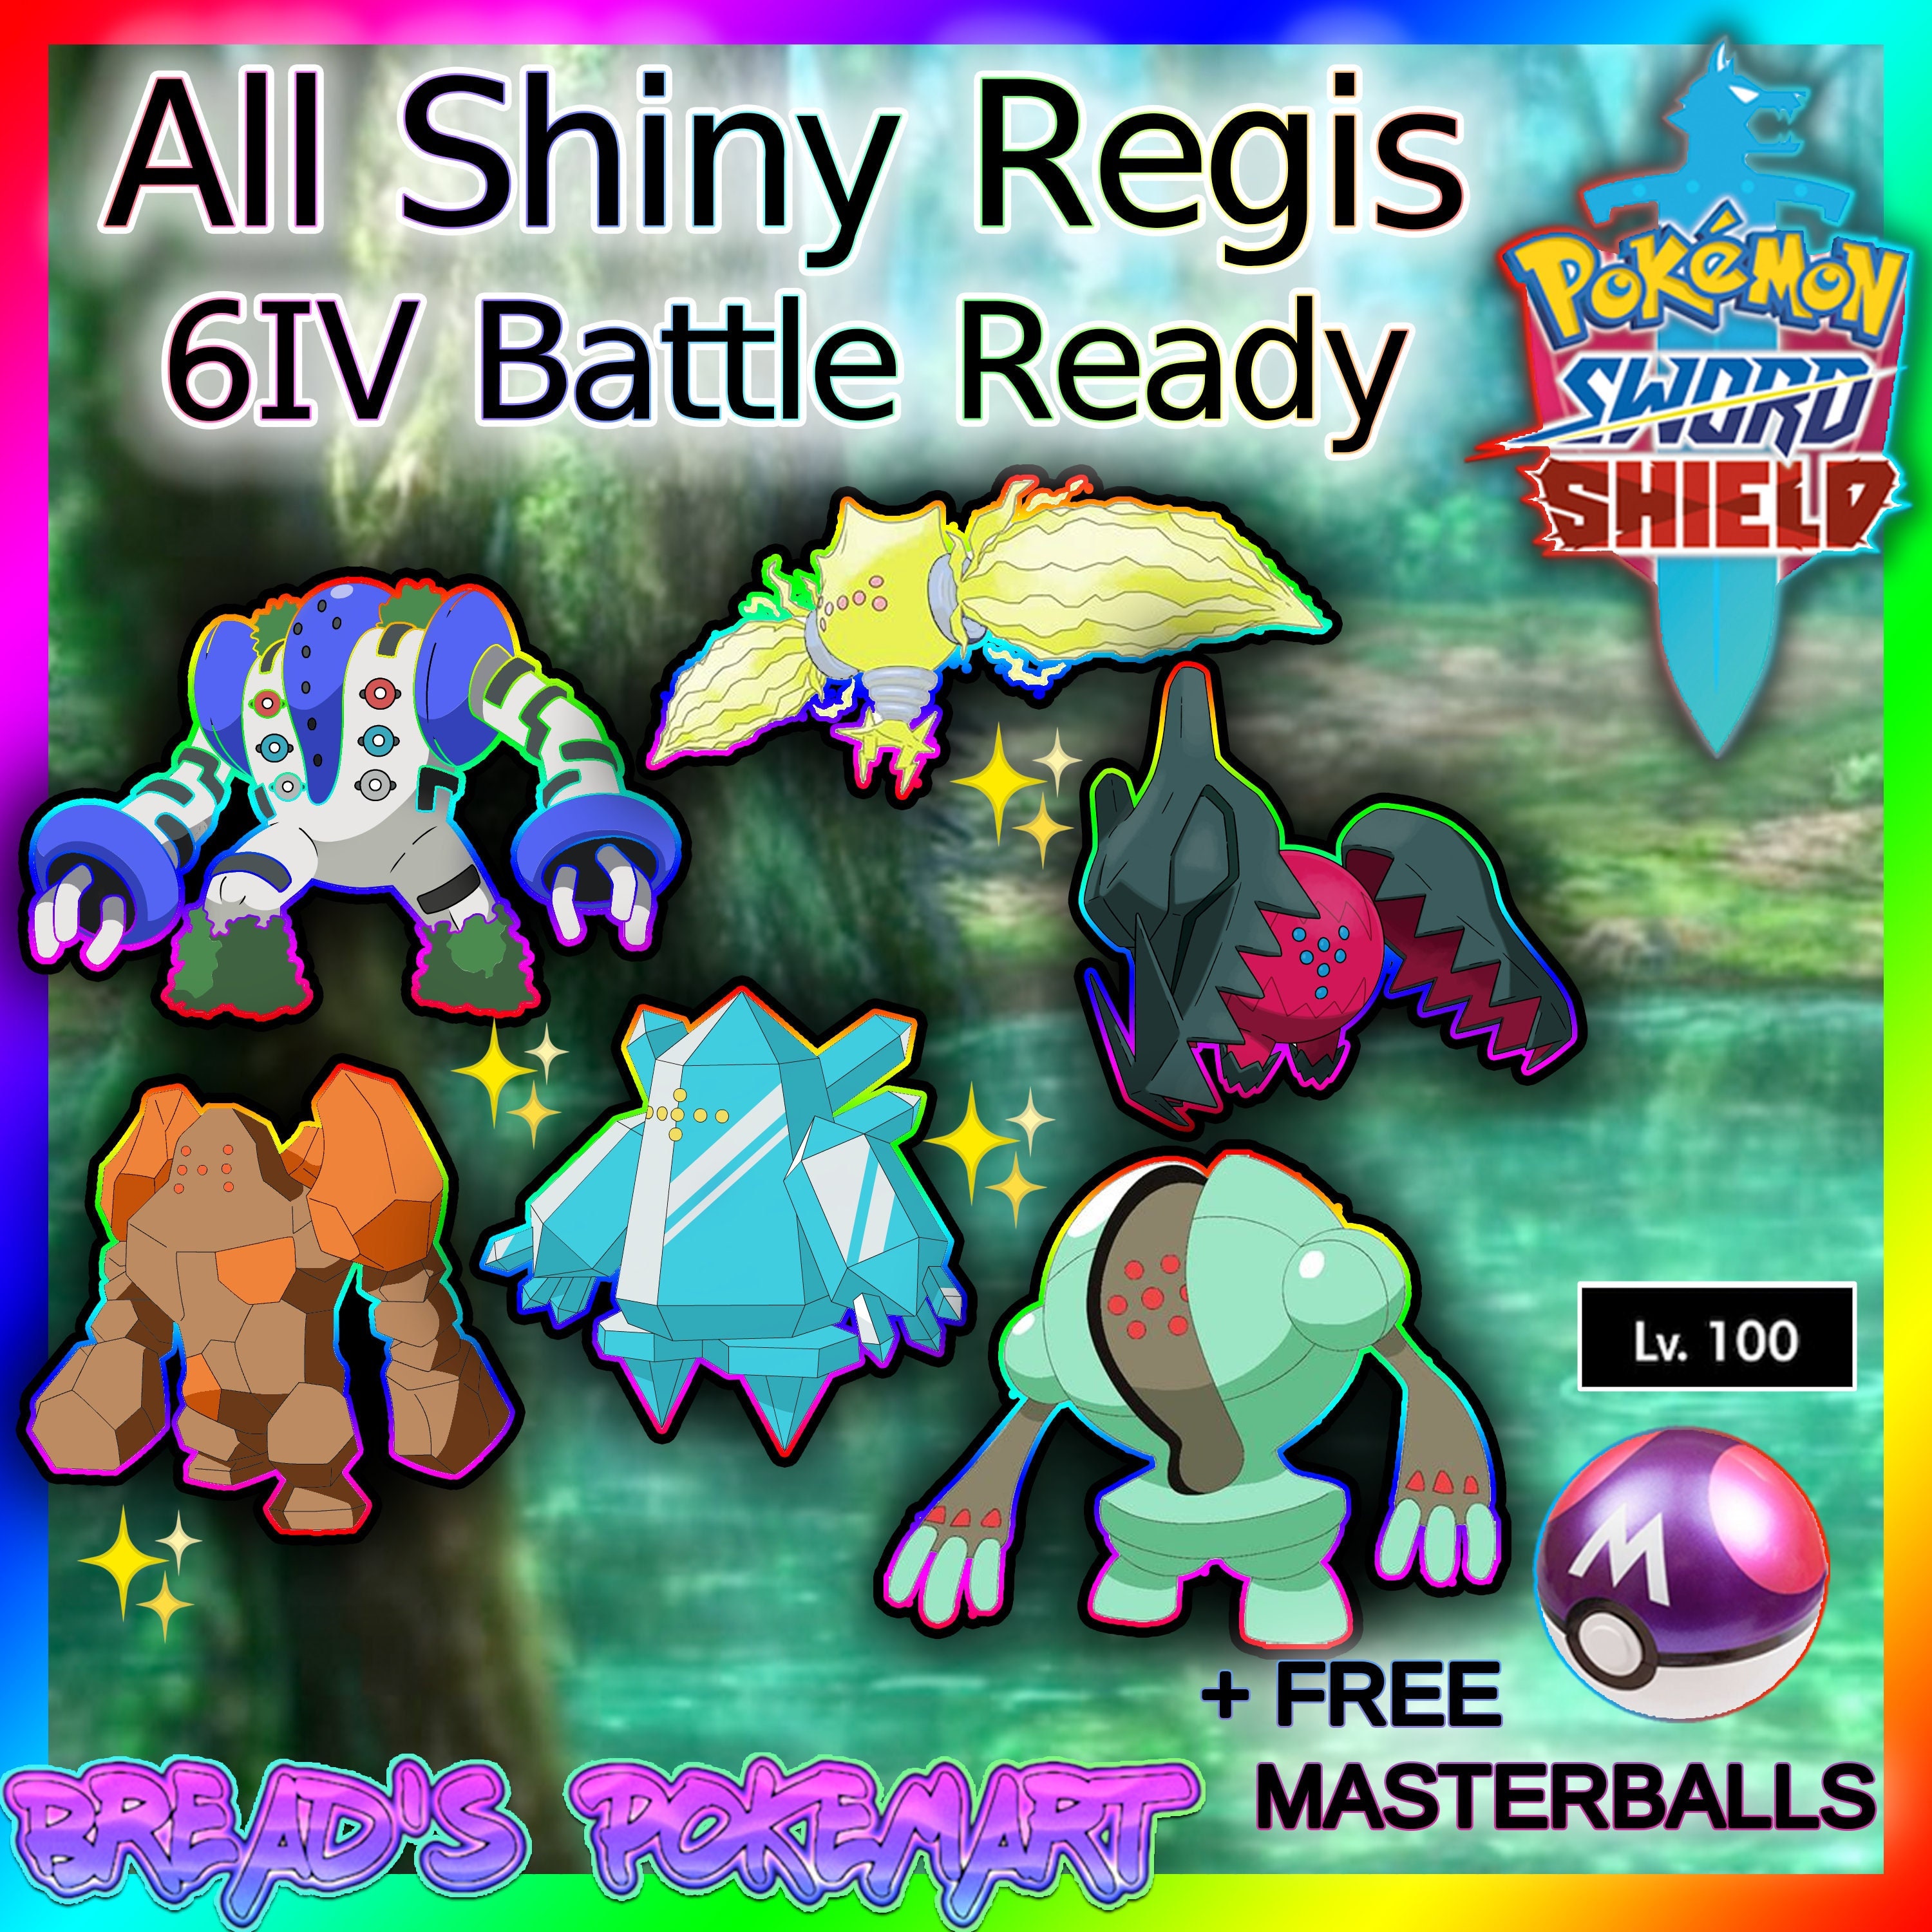 ✨ Shiny Regigigas ✨ Legendary Pokemon Sword and Shield Perfect IV Pokémon